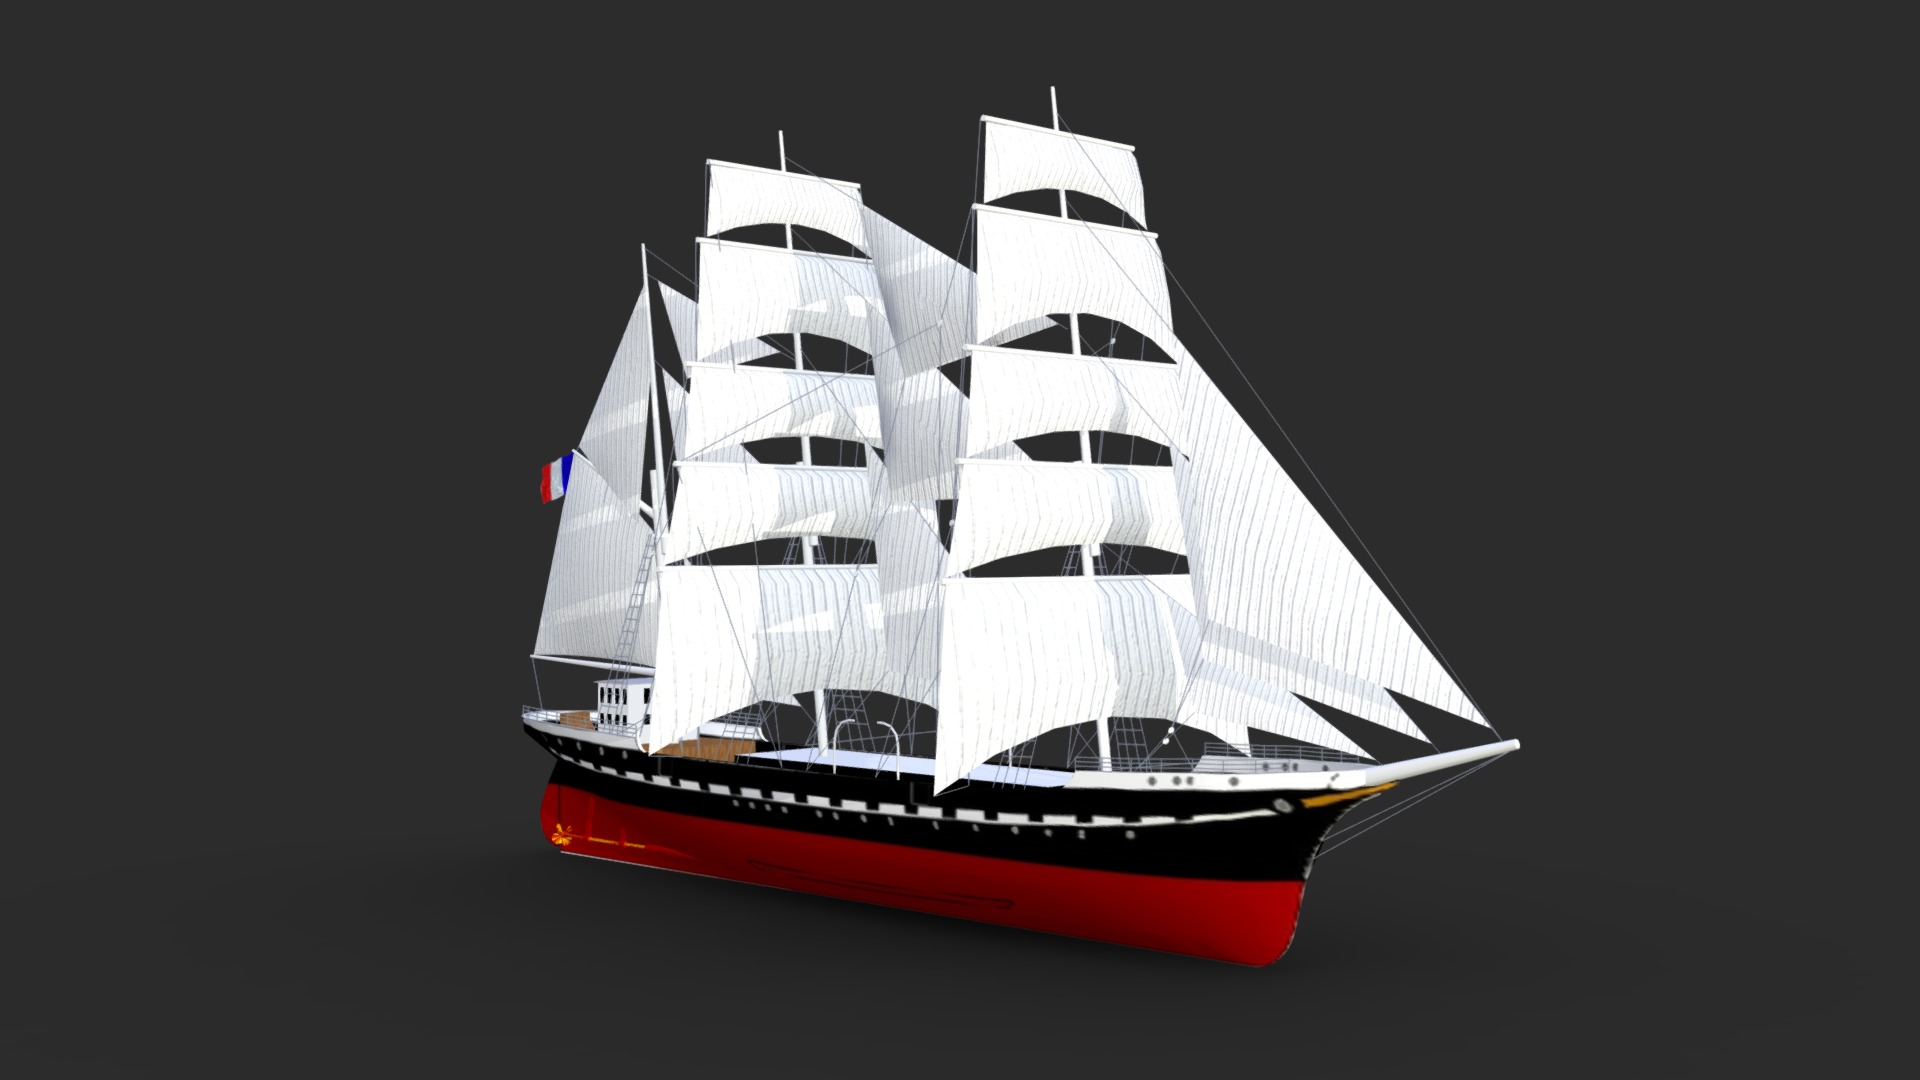 3D model Le Belem - This is a 3D model of the Le Belem. The 3D model is about a model of a ship.